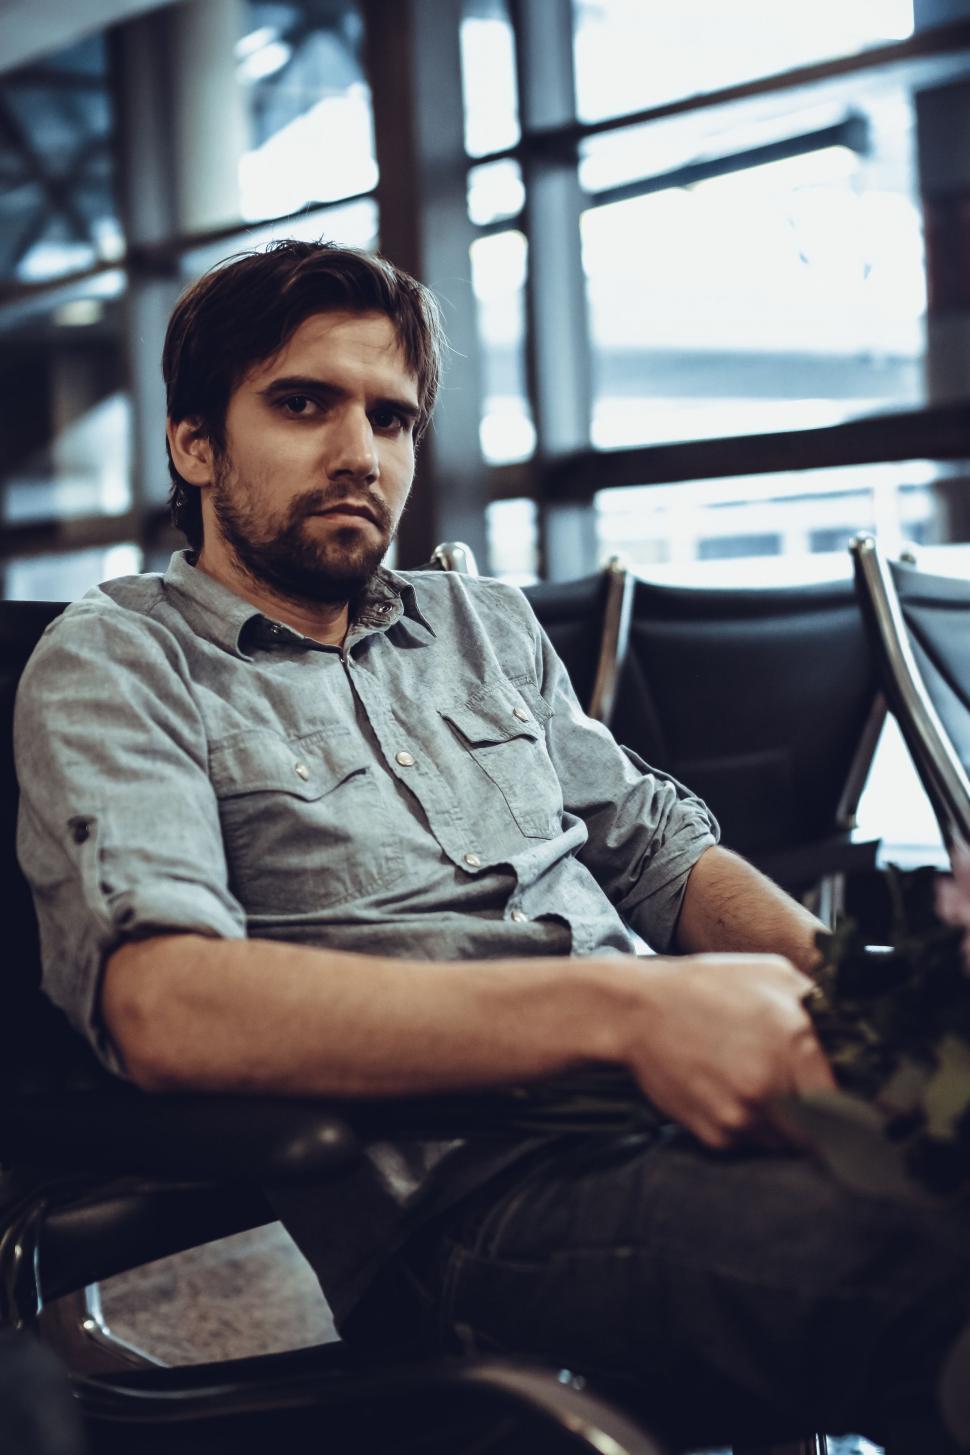 Download Free Stock Photo of Young Man waiting at the airport - looking at camera  